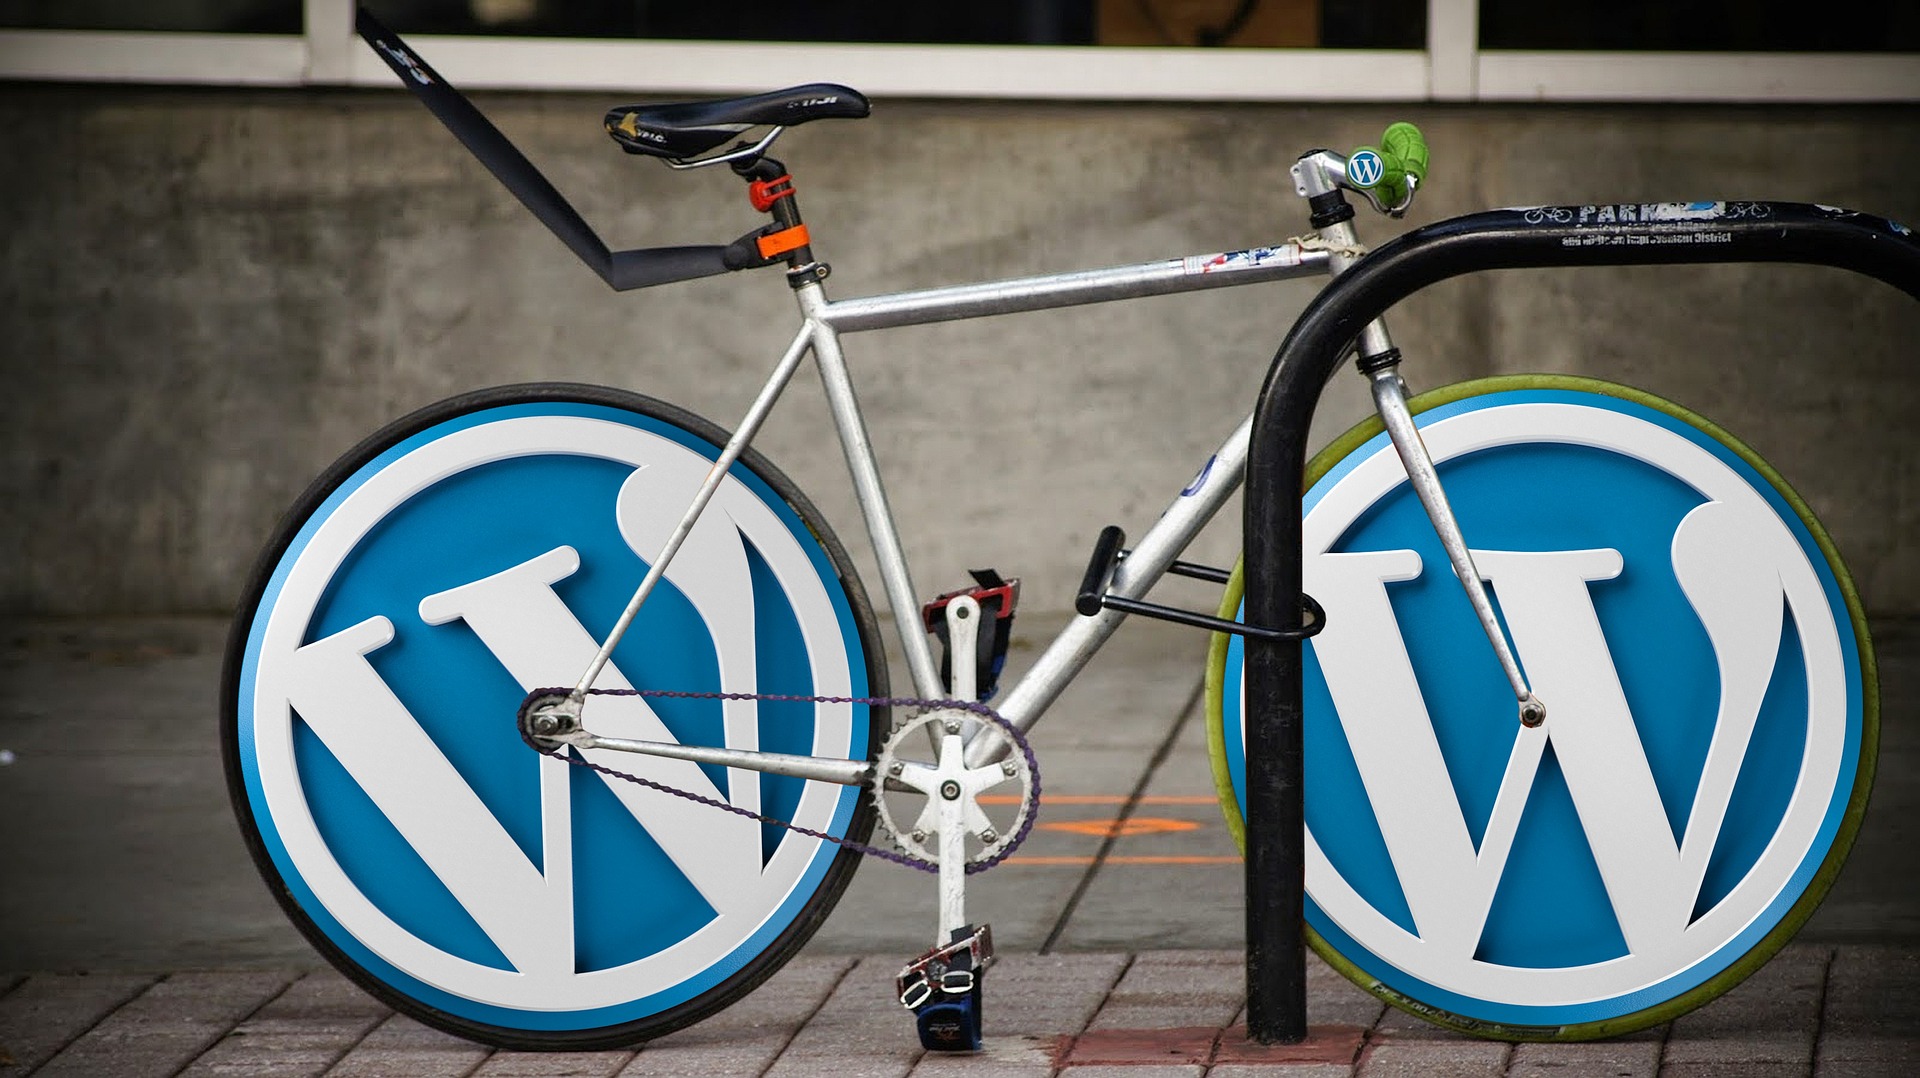 wordpress is as simple as riding a bike